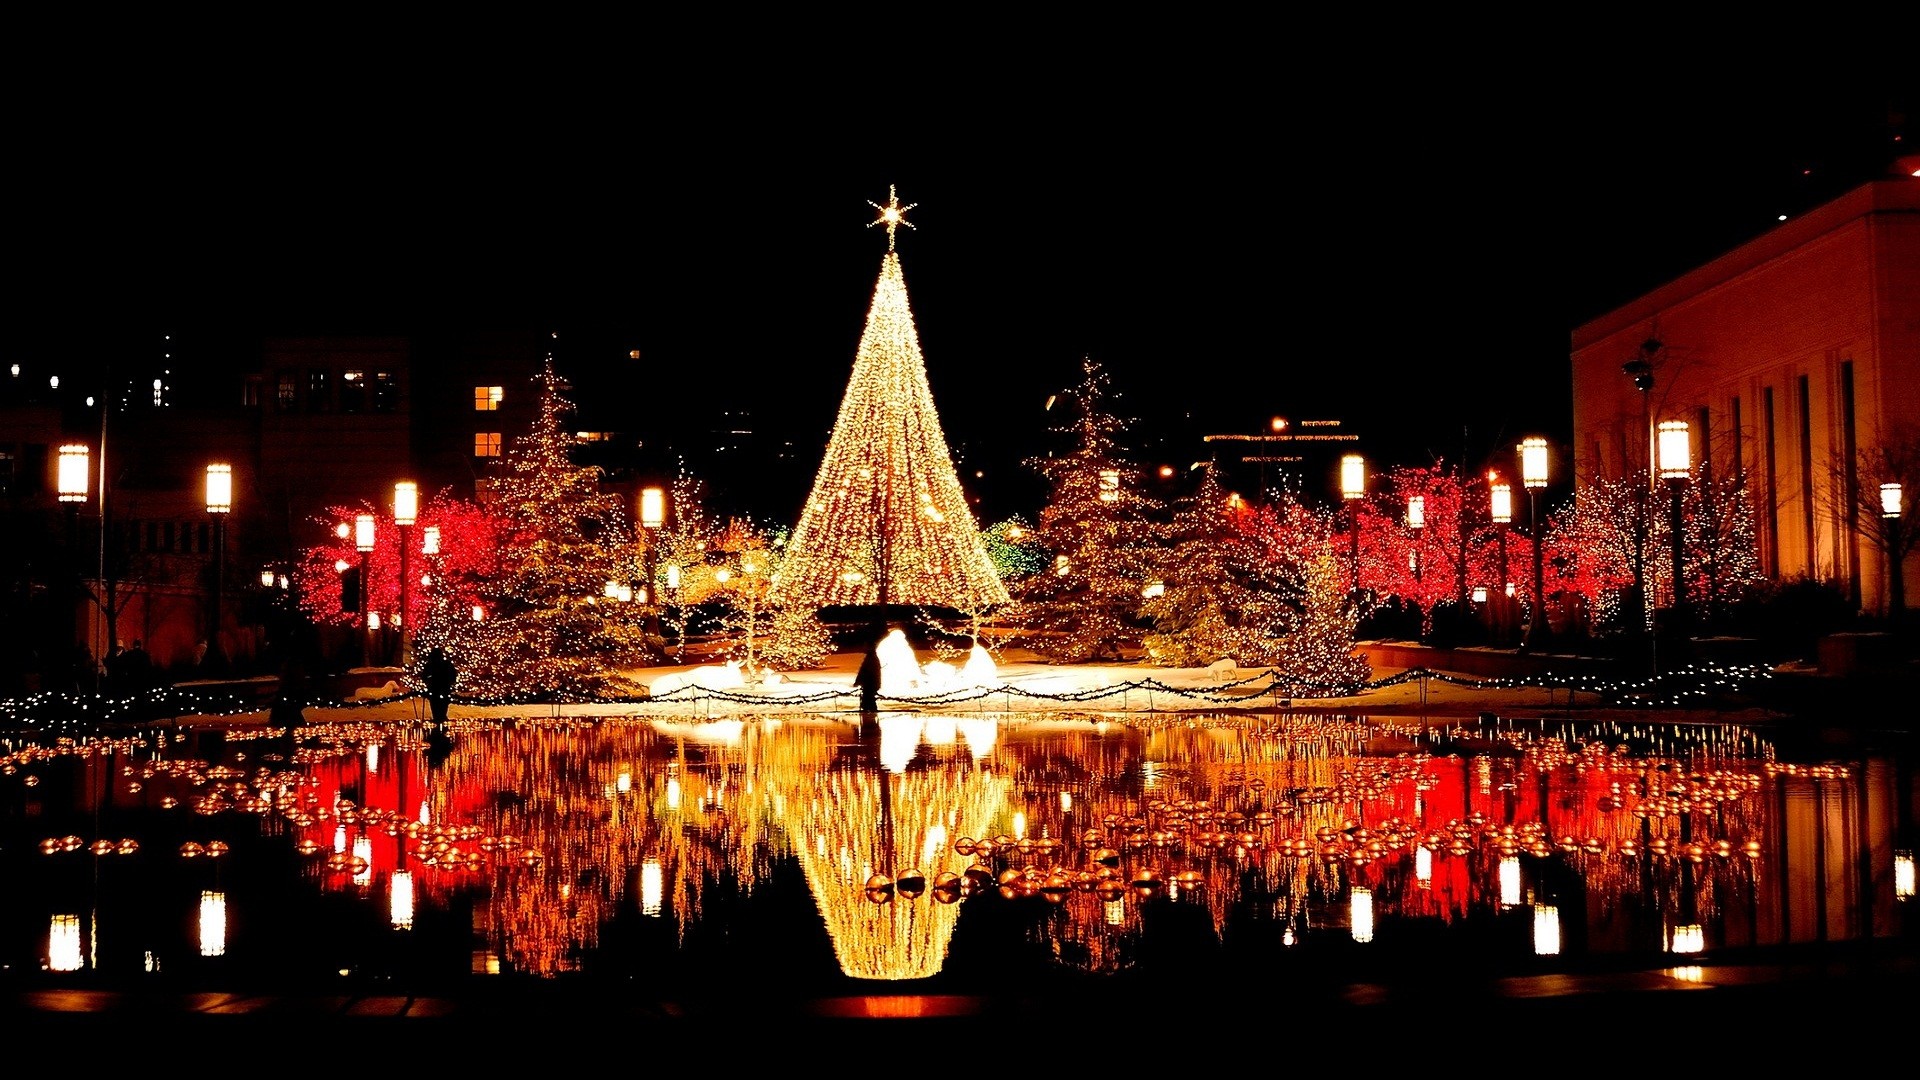 Christmas reflection light 1080p hd photos